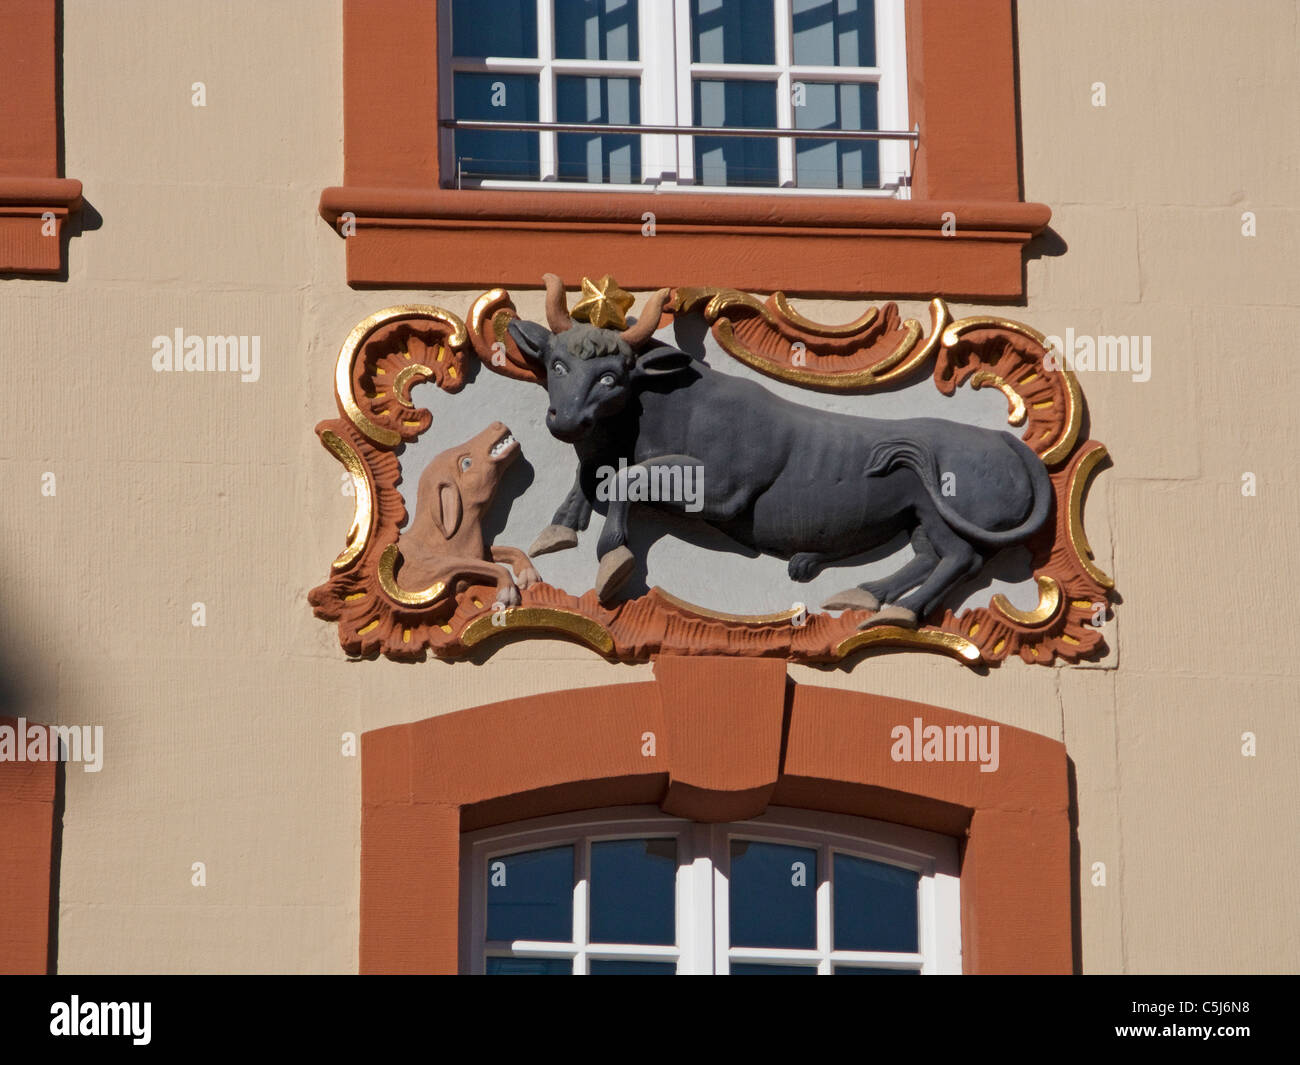 Tiermotiv, Hausfassade, Haus am Hauptmarkt, decorate casa facciata, motivi zoomorfi, Bull, Foto Stock